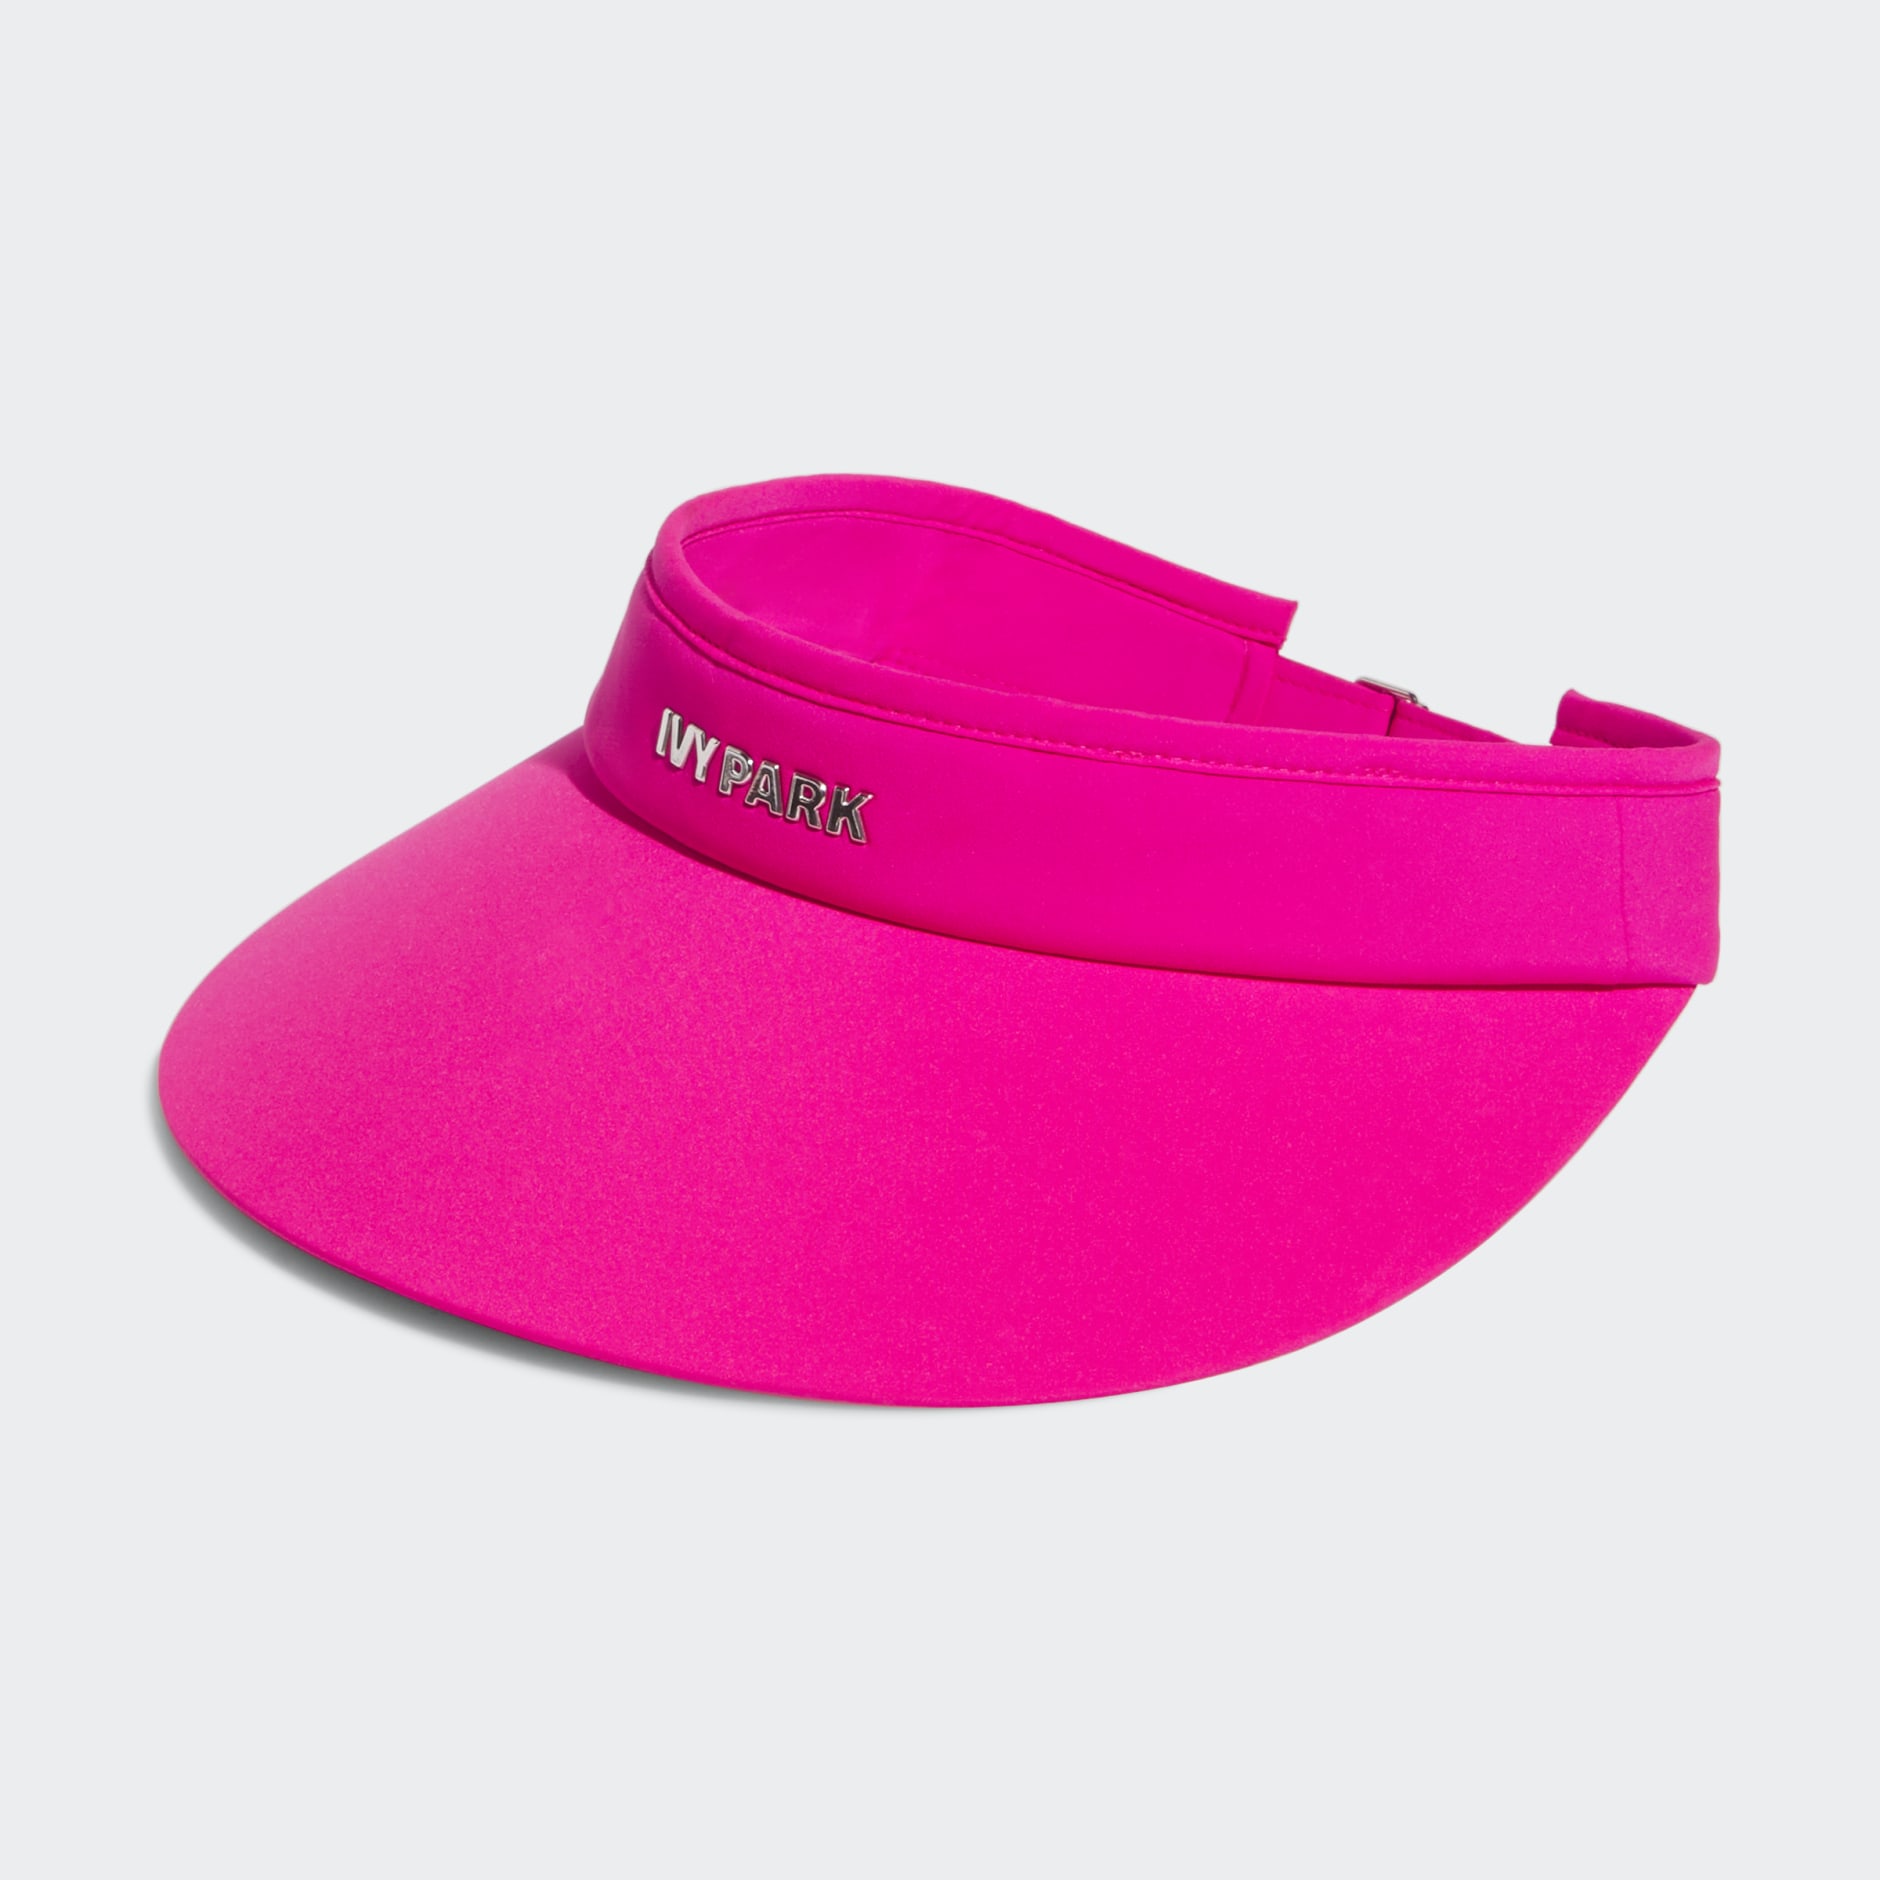 Accessories - IVY PARK Visor - Pink